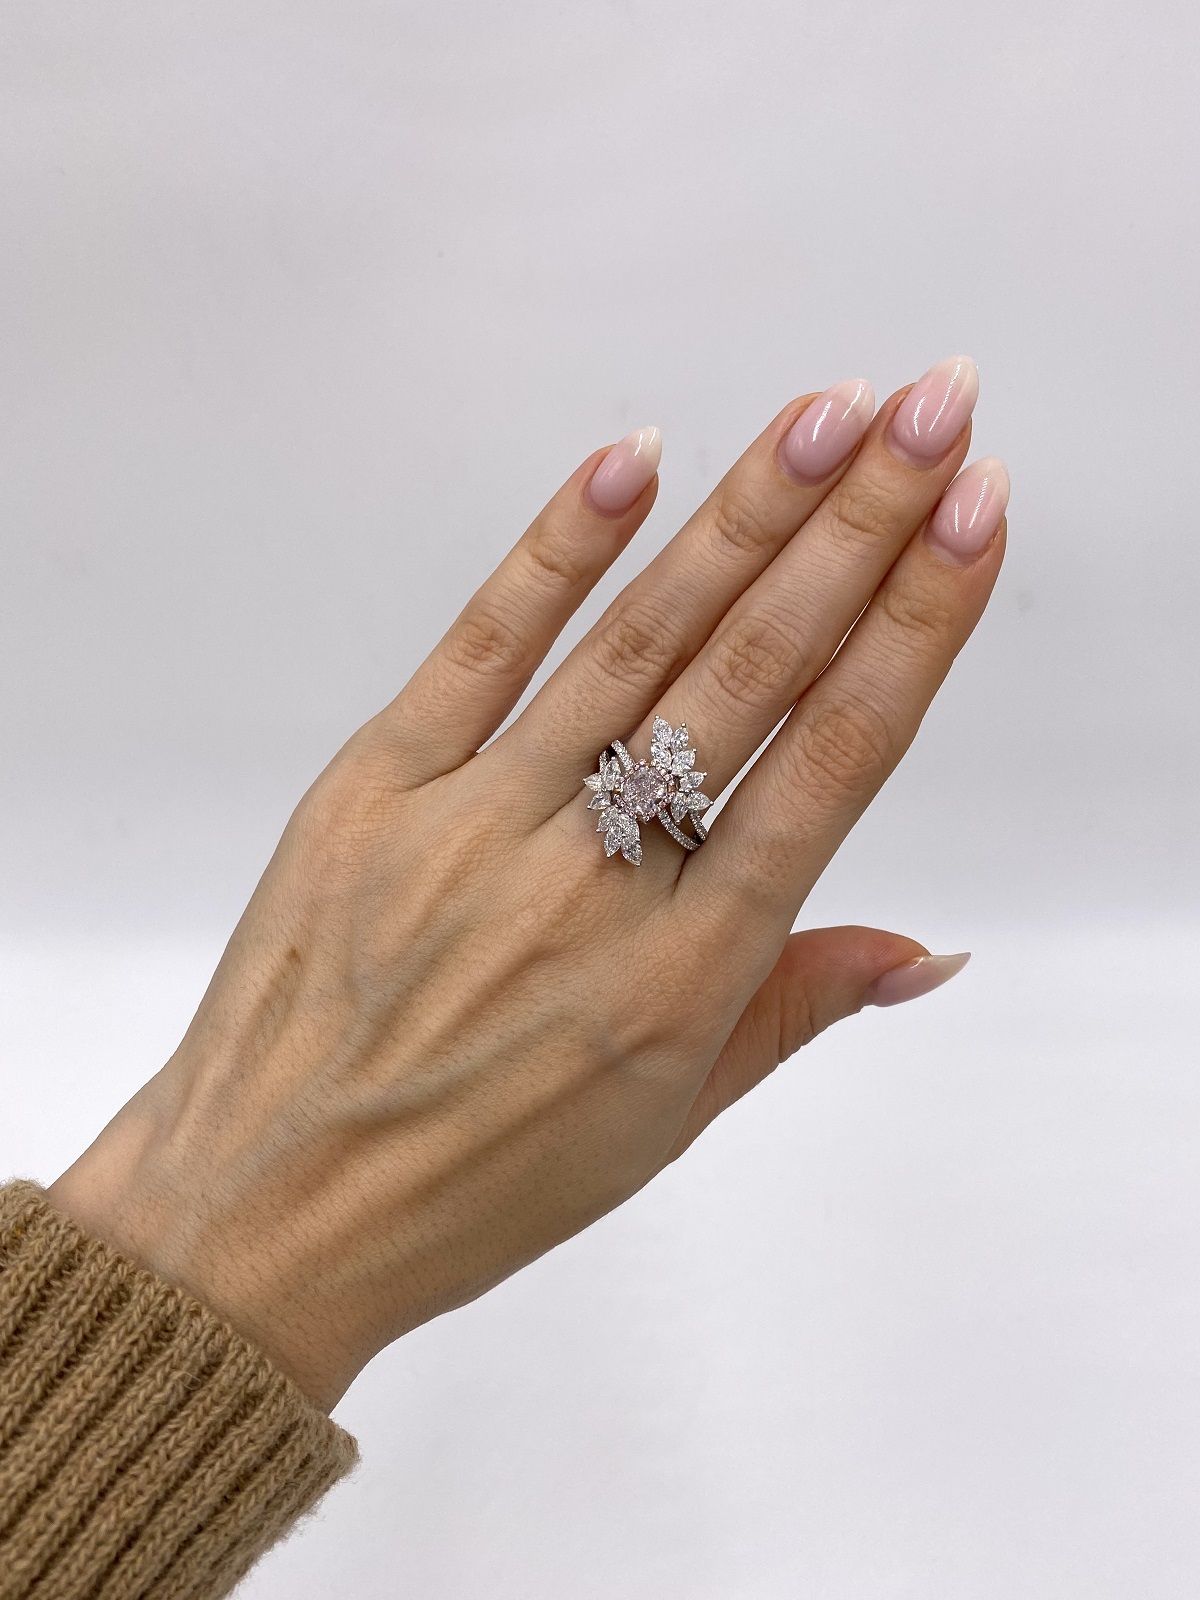 Кольцо с розовым бриллиантом весом 4,32 г